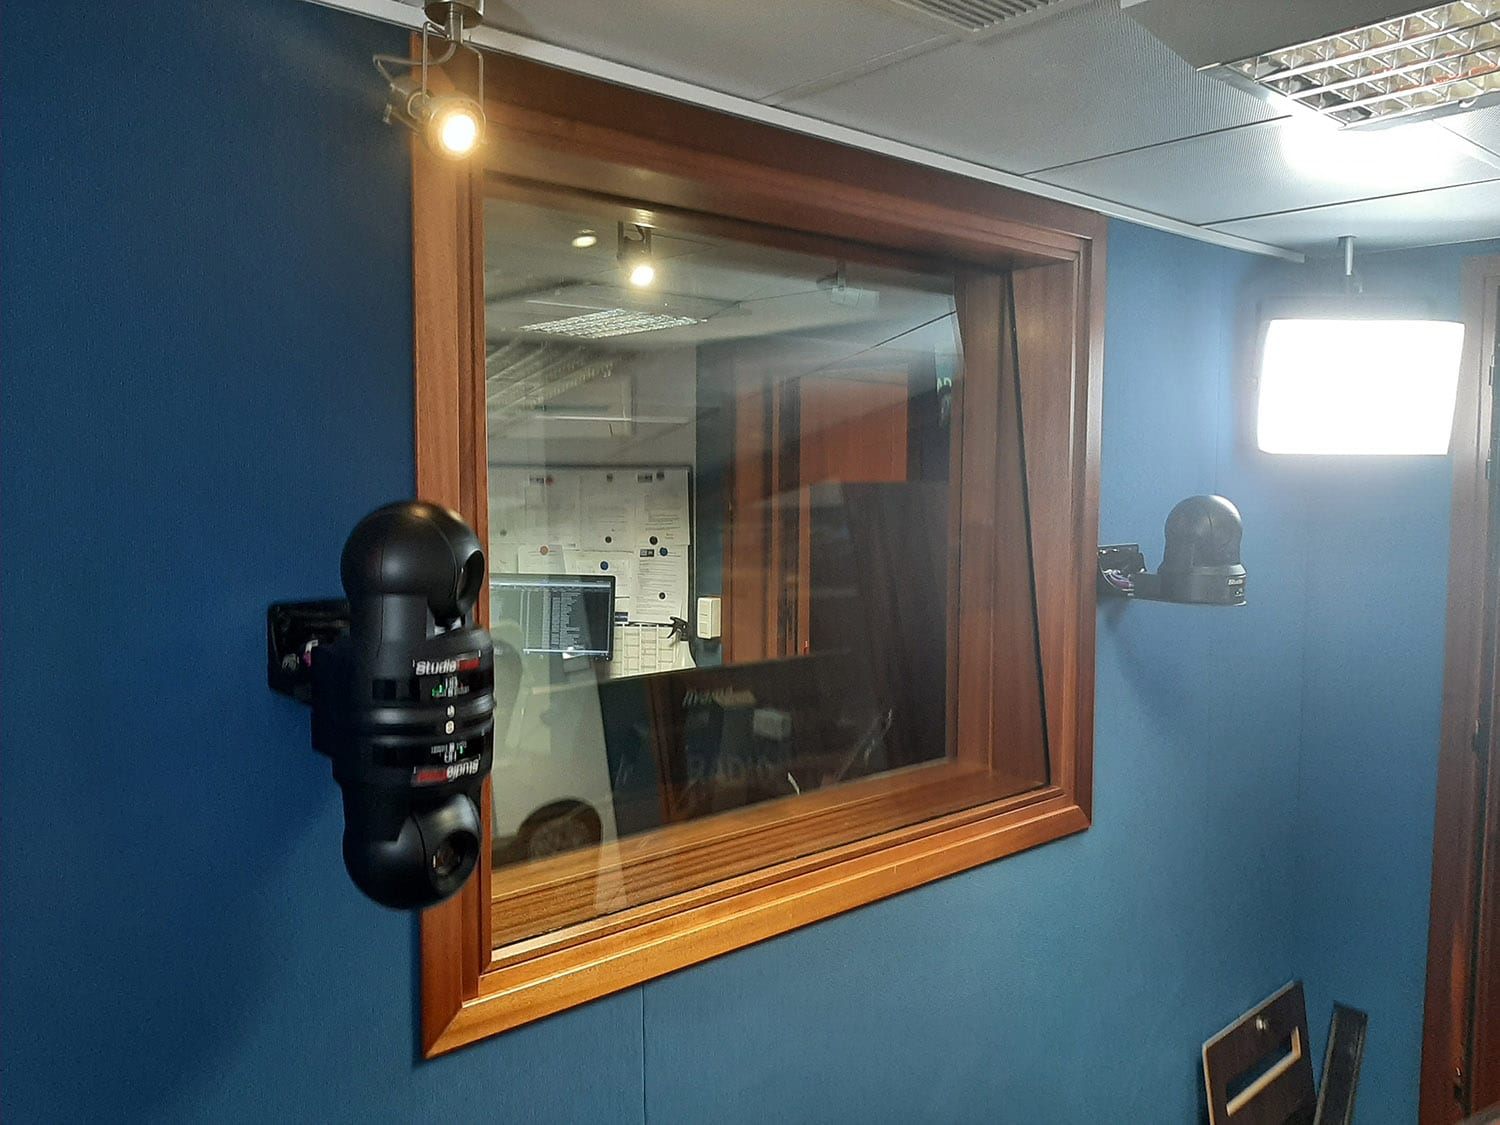 Radio Notre Dame studio with a StudioCast